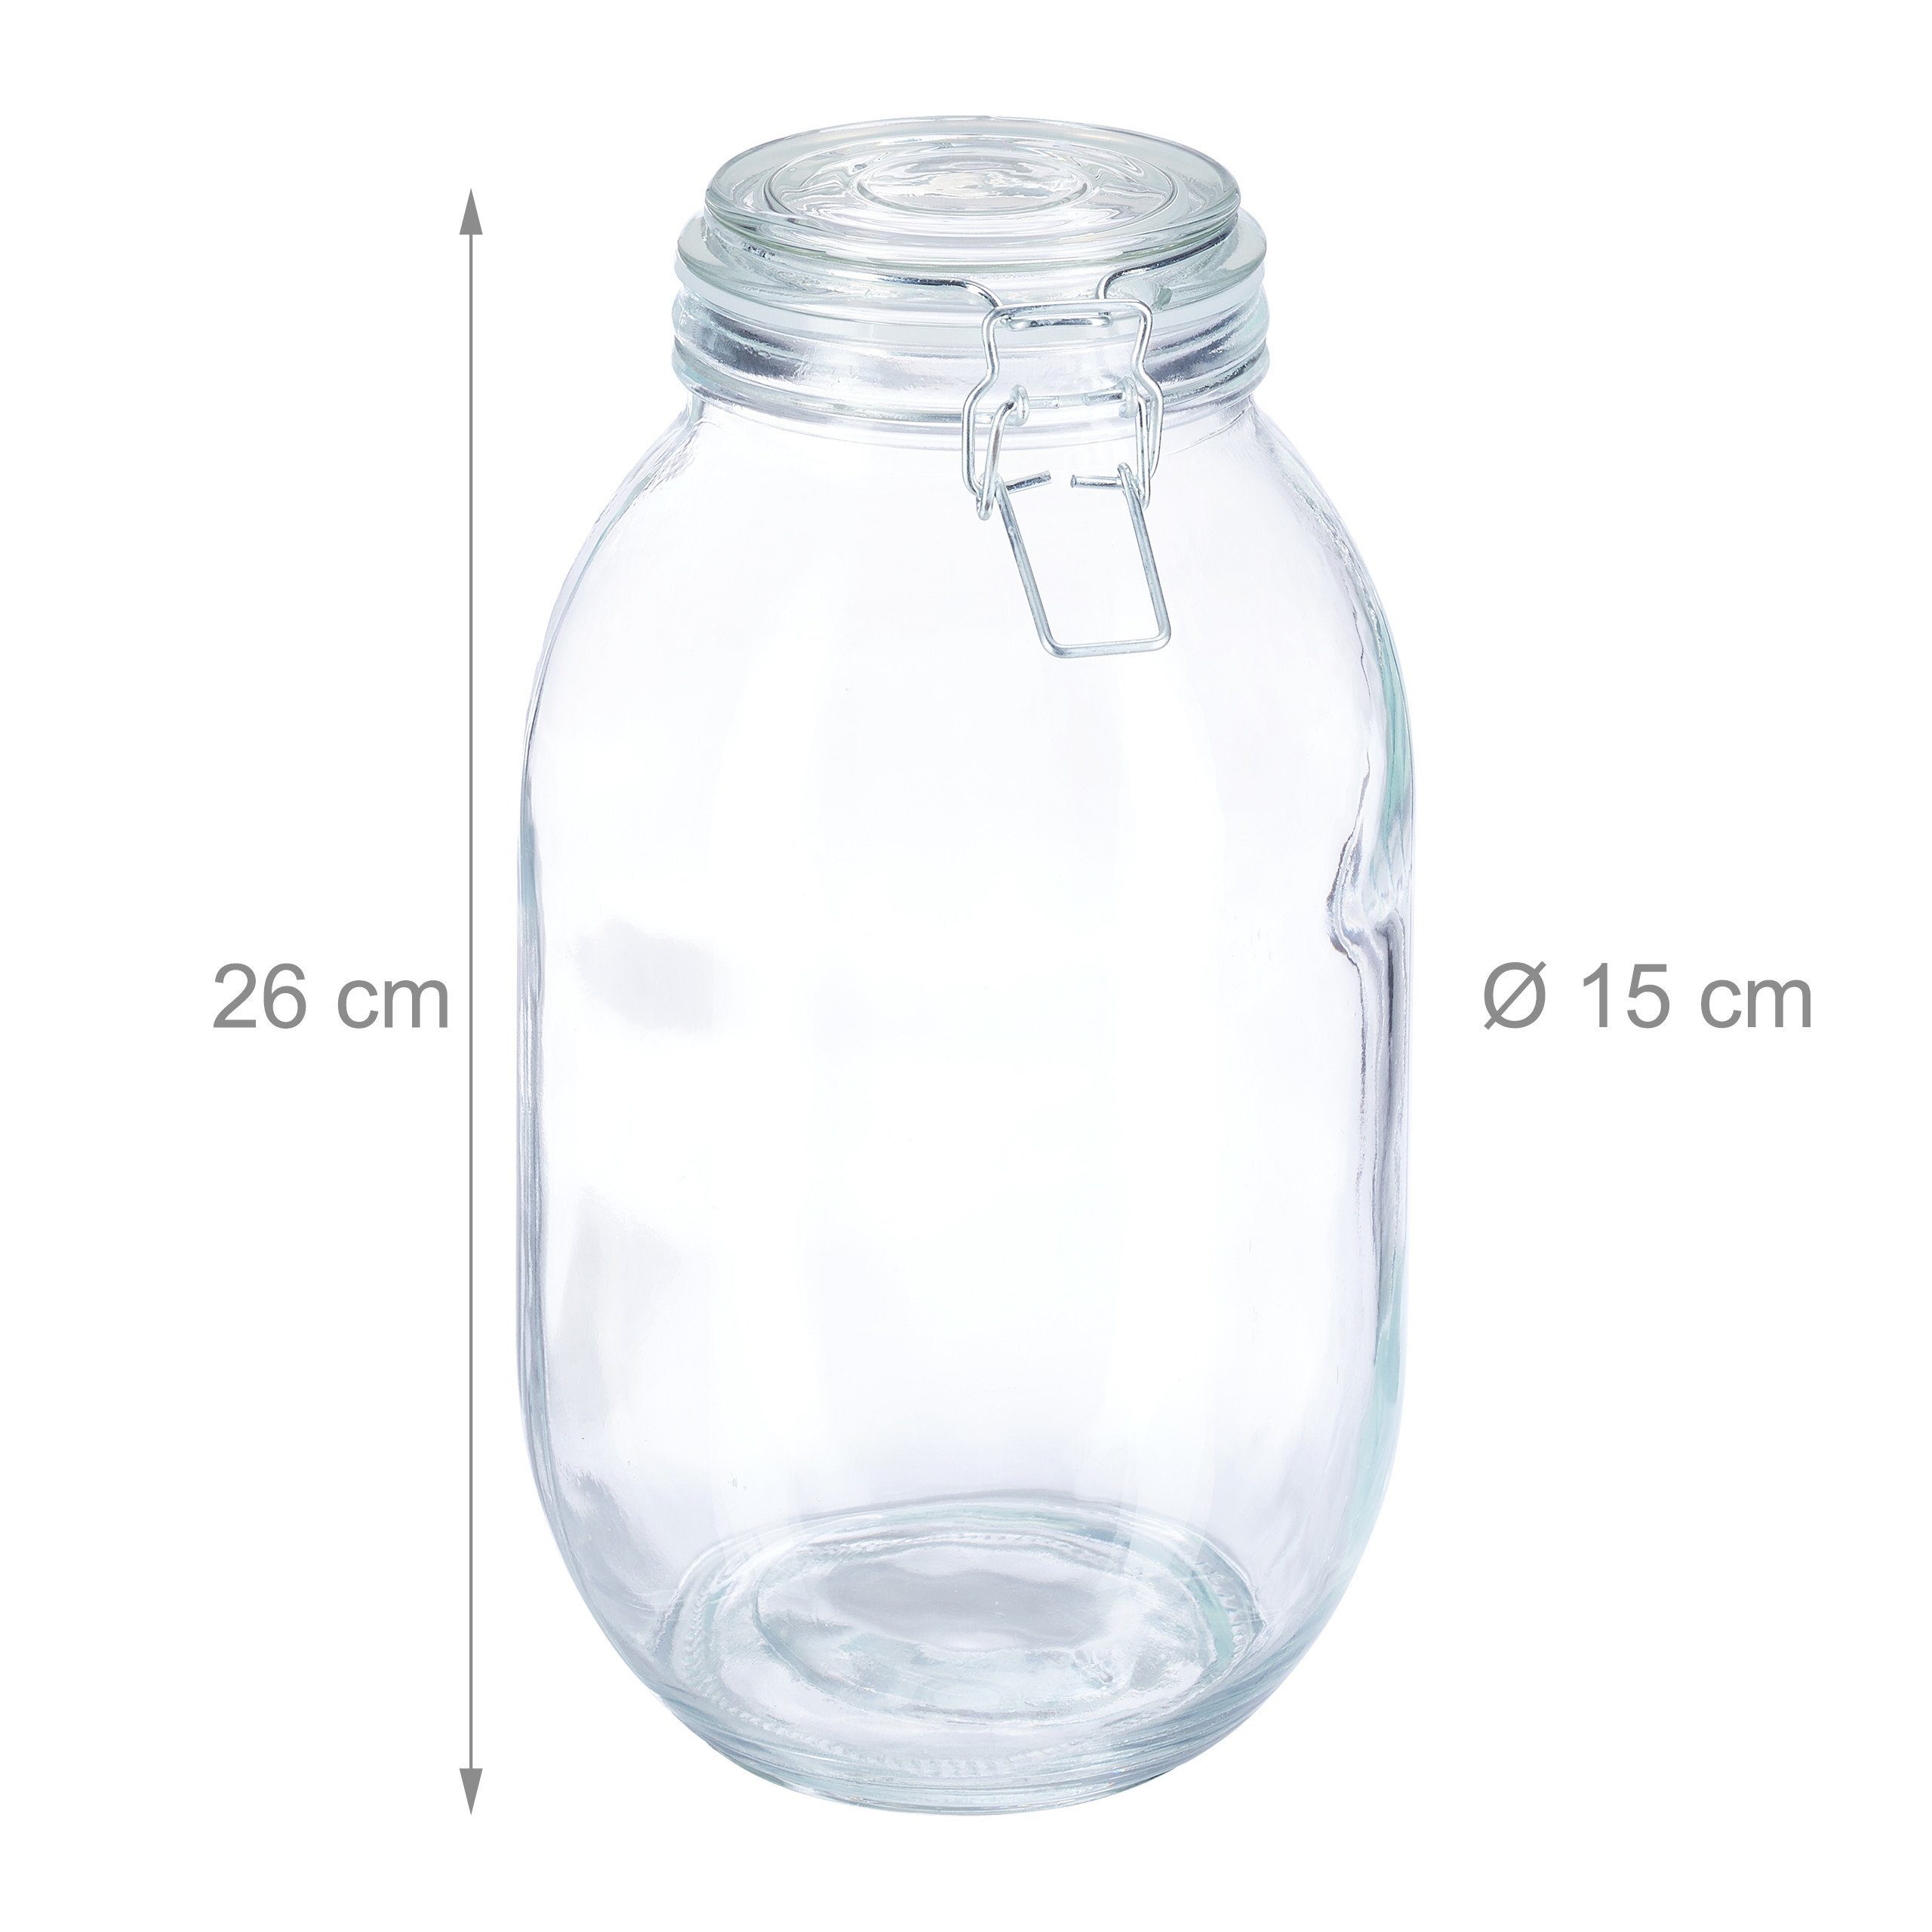 relaxdays Einmachglas Einmachglas 3 Glas Liter